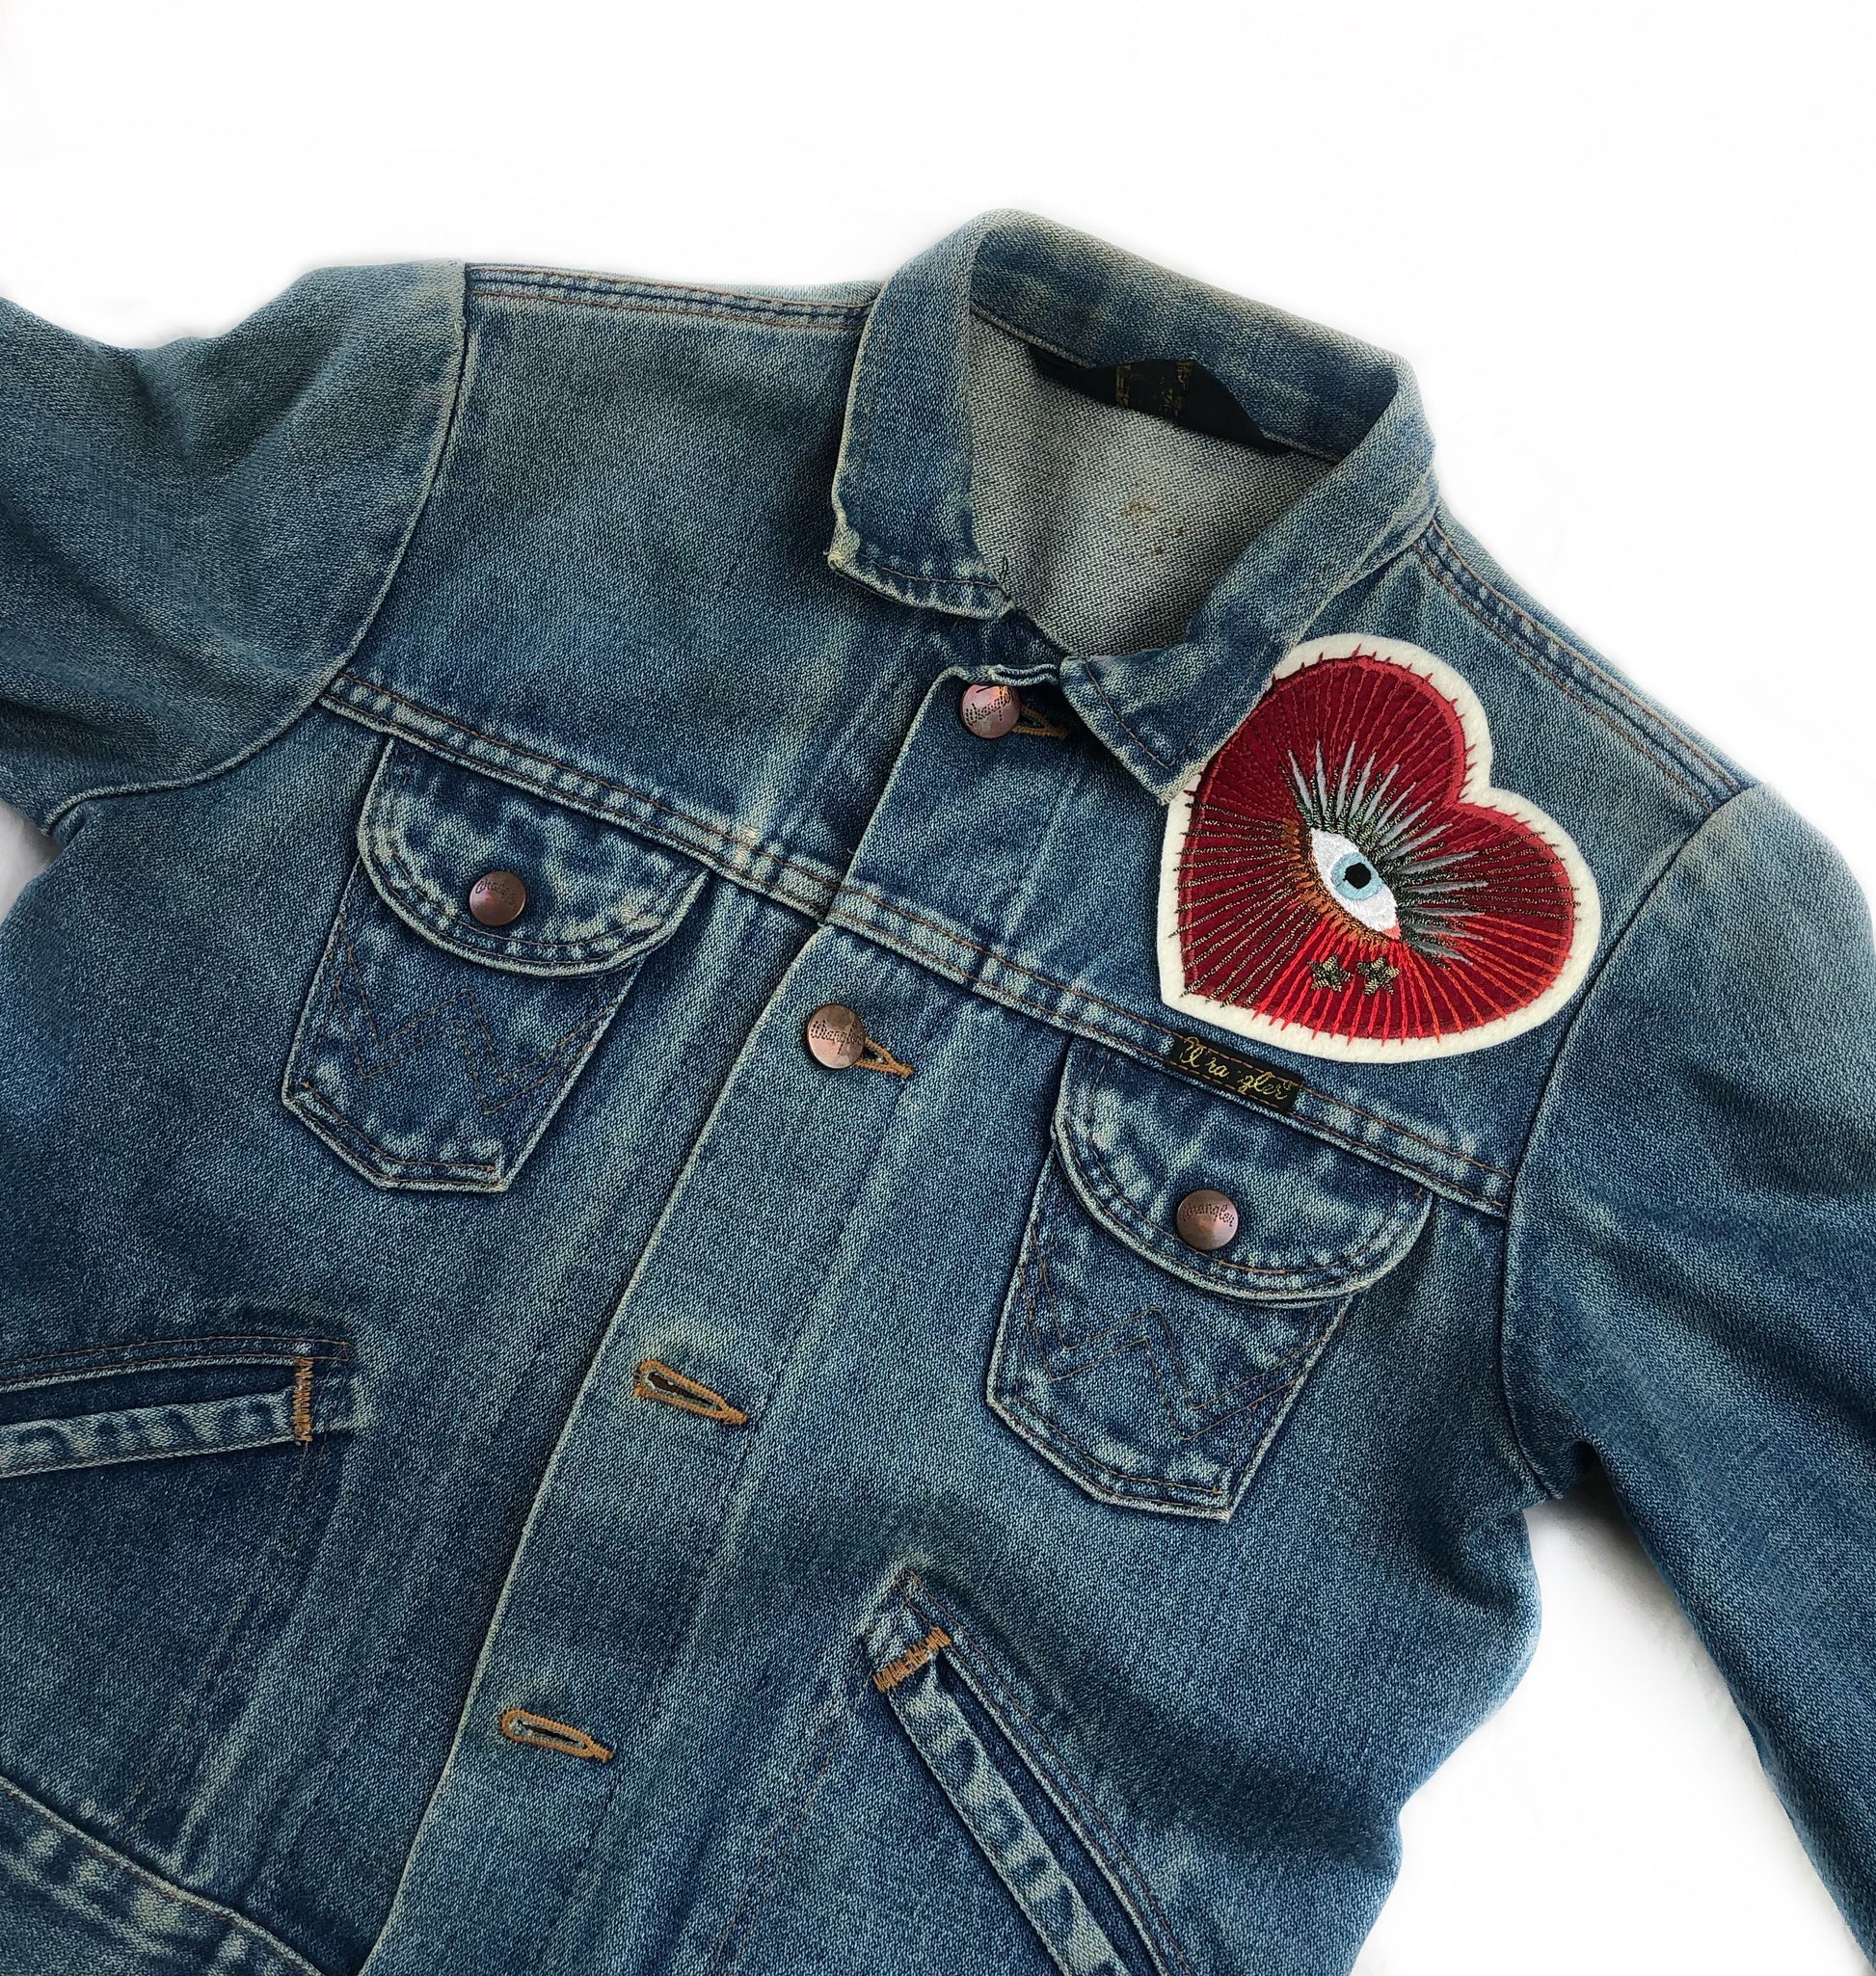 Sacred heart with eye embroidered patch on front shoulder of blue denim jacket